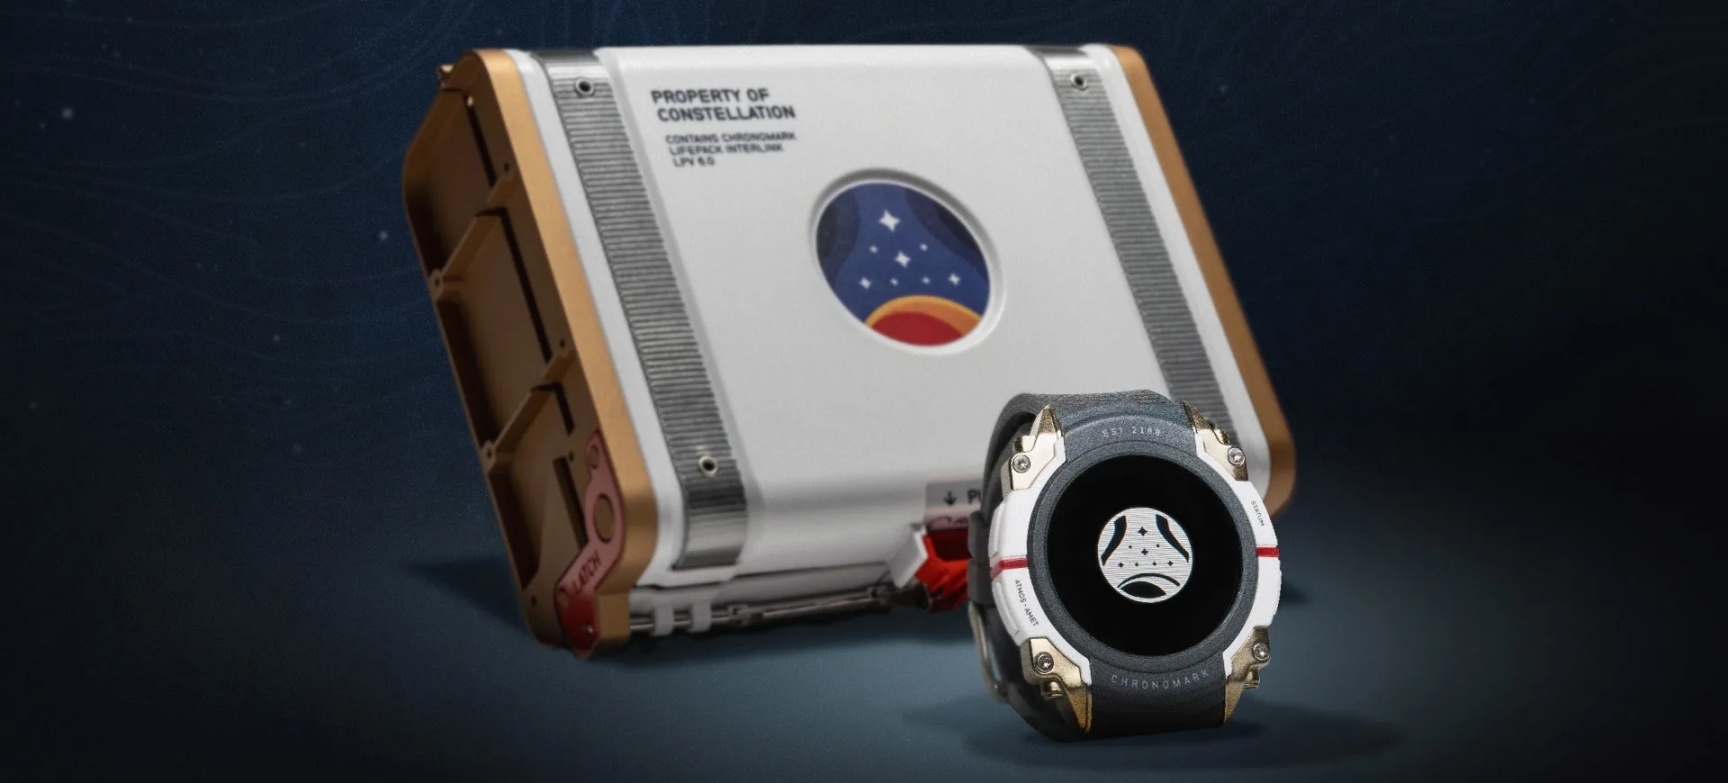 【PC遊戲】有創意！玩家將《星空》收藏版手錶盒改造成了遊戲機-第1張